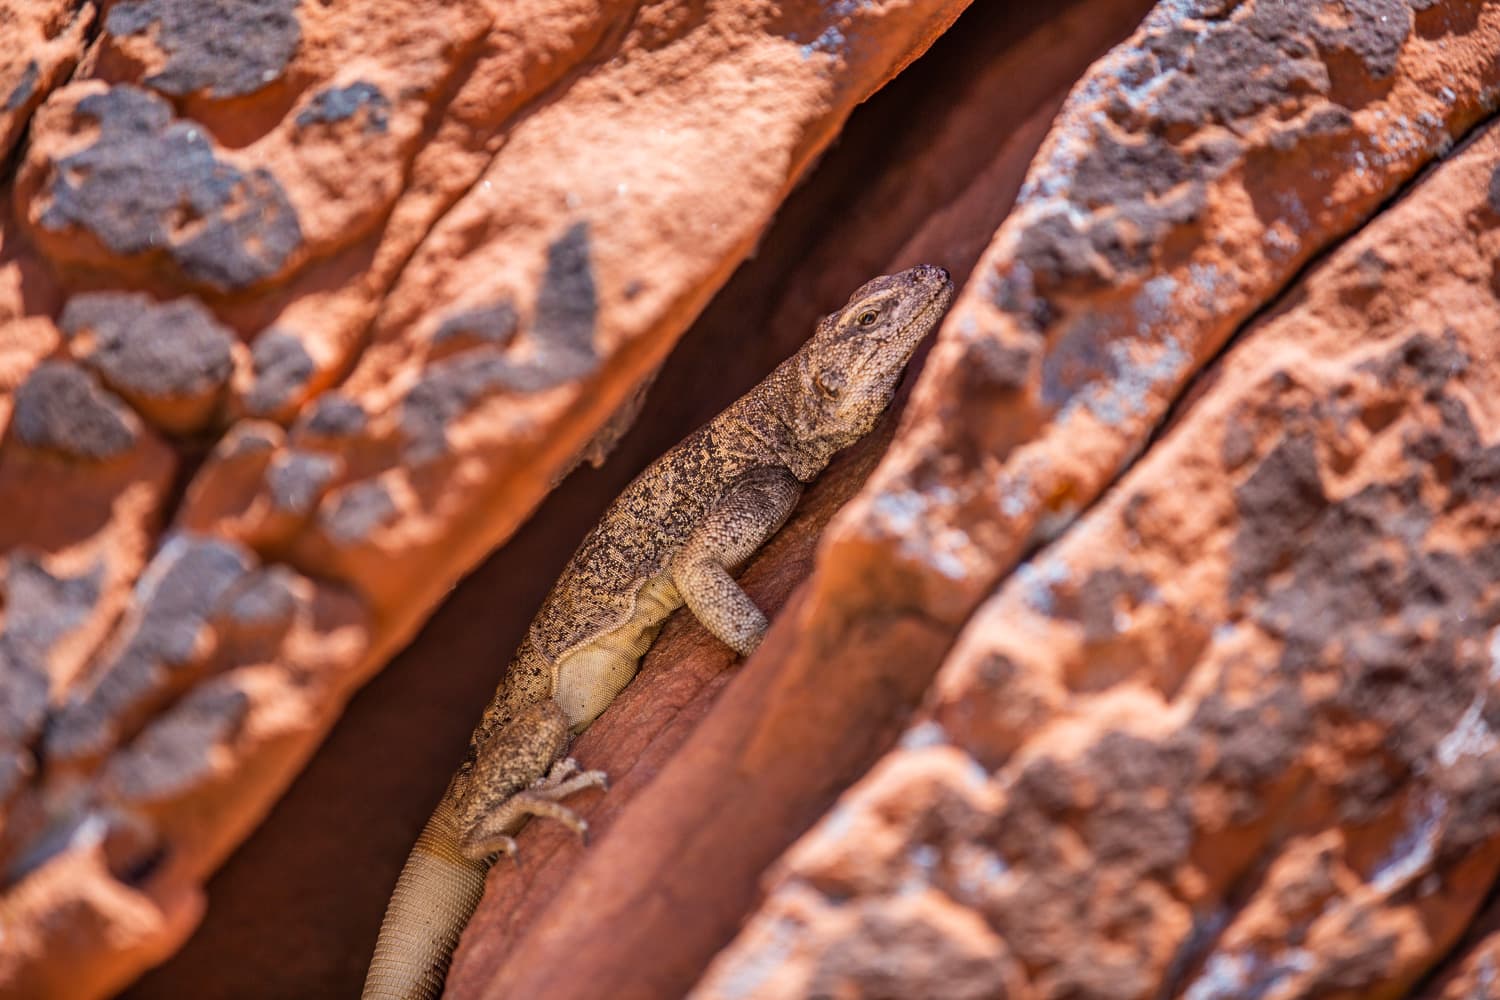 A chuckwalla lizard is wedged in a rock crevice.